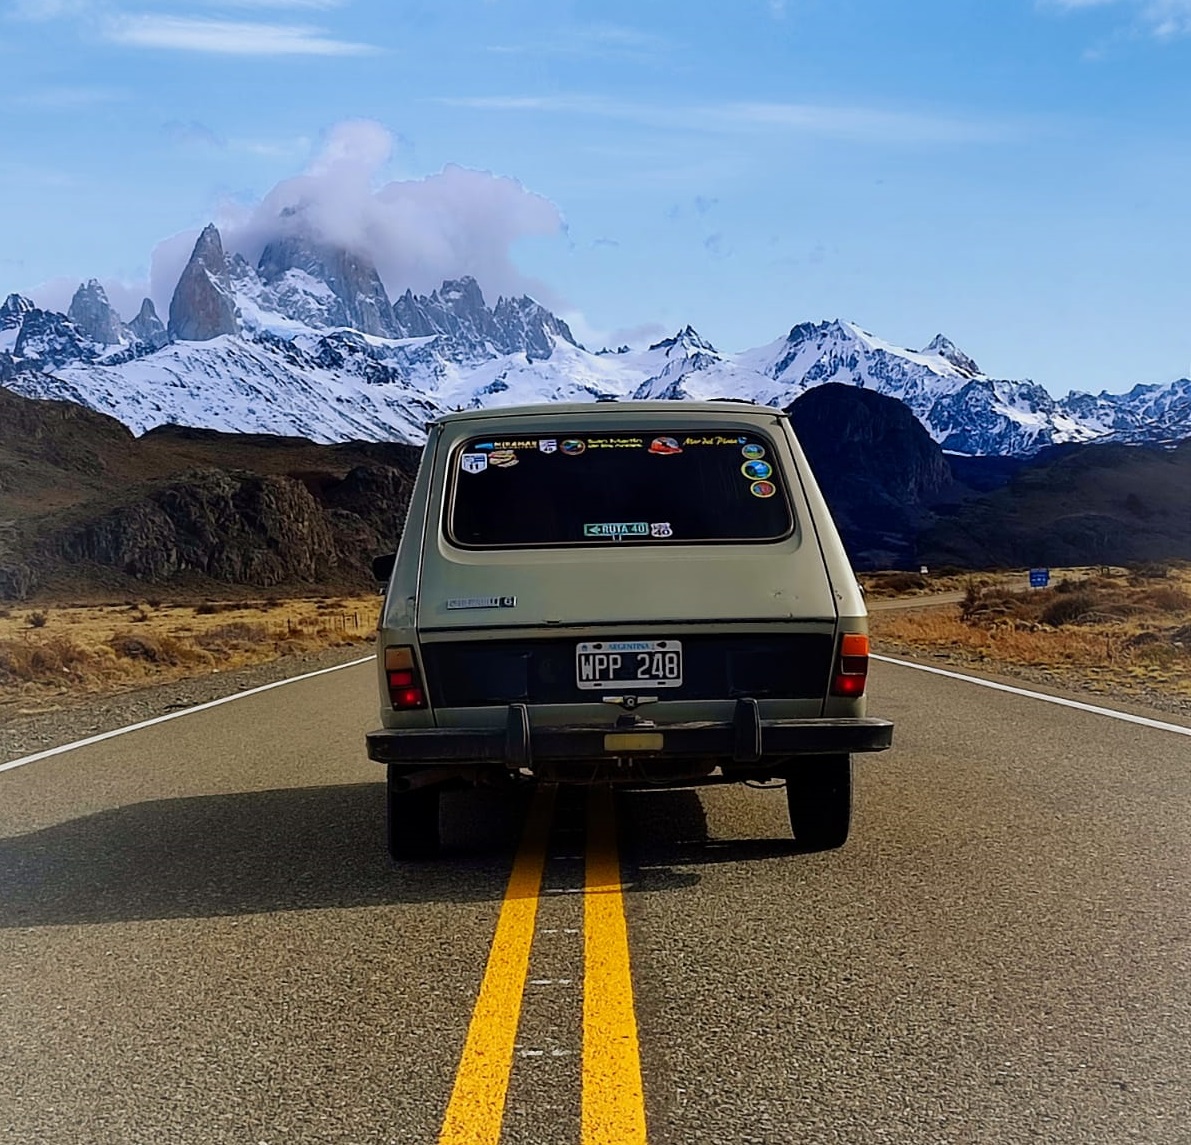 Su Renaul 6 se la bancó por toda la Ruta 40, al atravesar la Patagonia. Fotos: Luiyi Urli.